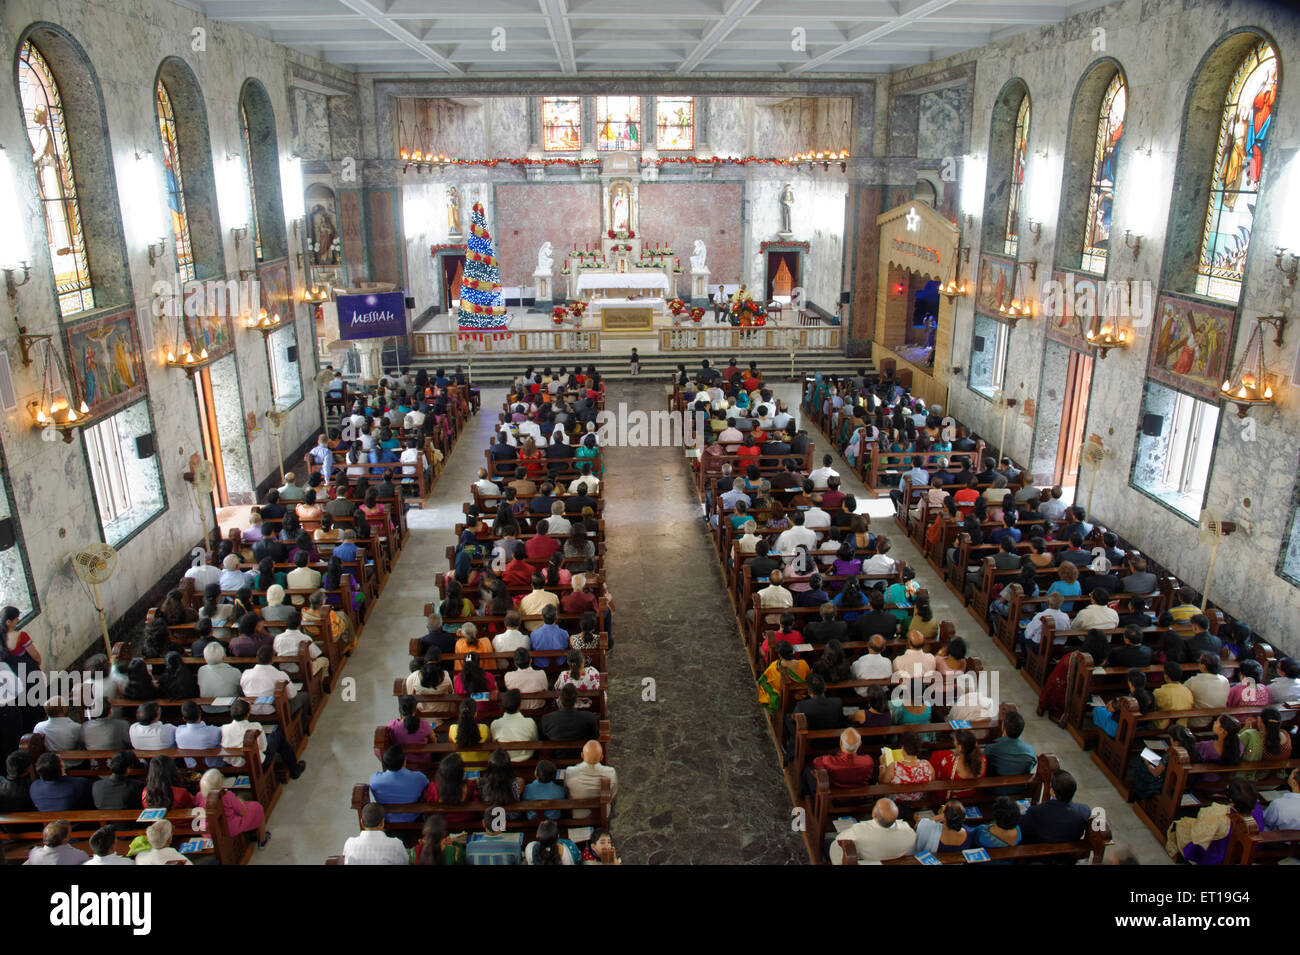 Weihnachten Feier Don Bosco Kirche Matunga Mumbai Maharashtra Indien Asien Nein Herr Stockfoto